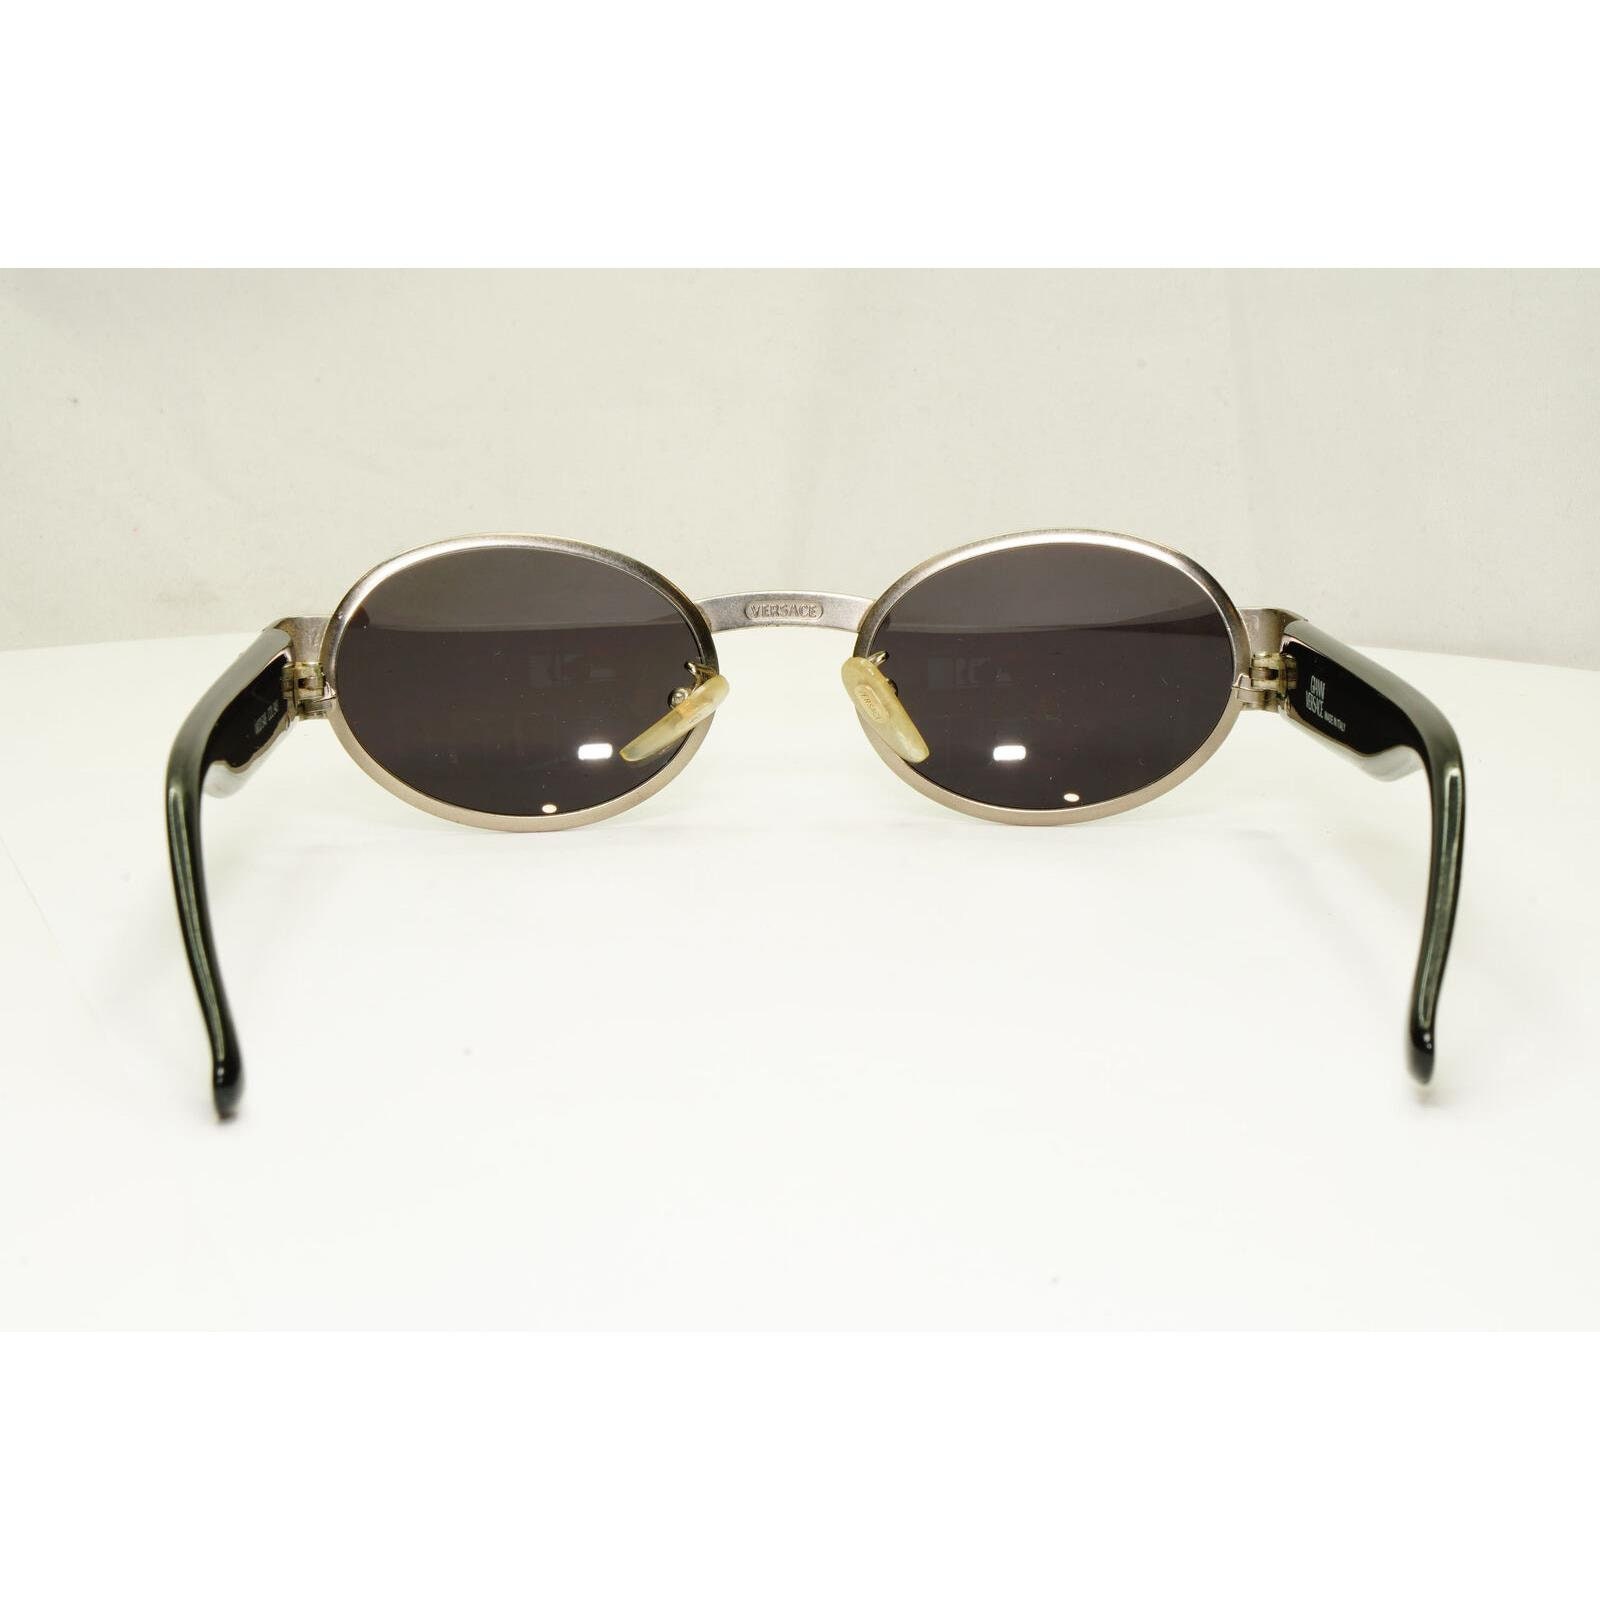 Gianni Versace 1996 Vintage Unisex Zwart Ovaal Metalen Zonnebril Mod S30 Col 028 Accessoires Zonnebrillen & Eyewear Zonnebrillen 